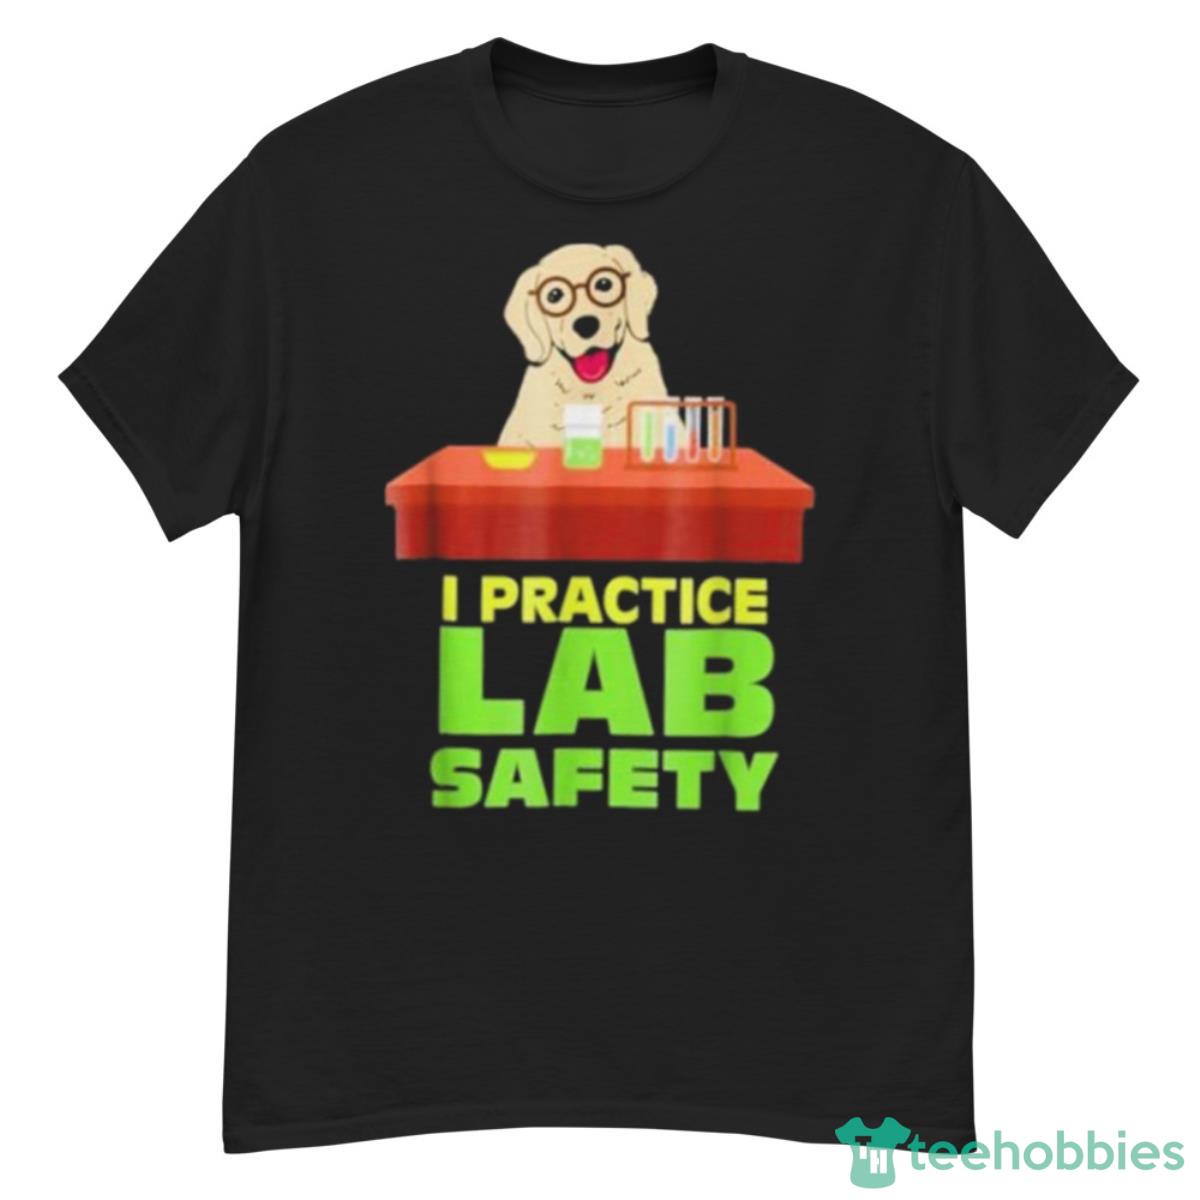 I Practice Lab Safety Funny Labrador Dog Shirt - G500 Men’s Classic T-Shirt